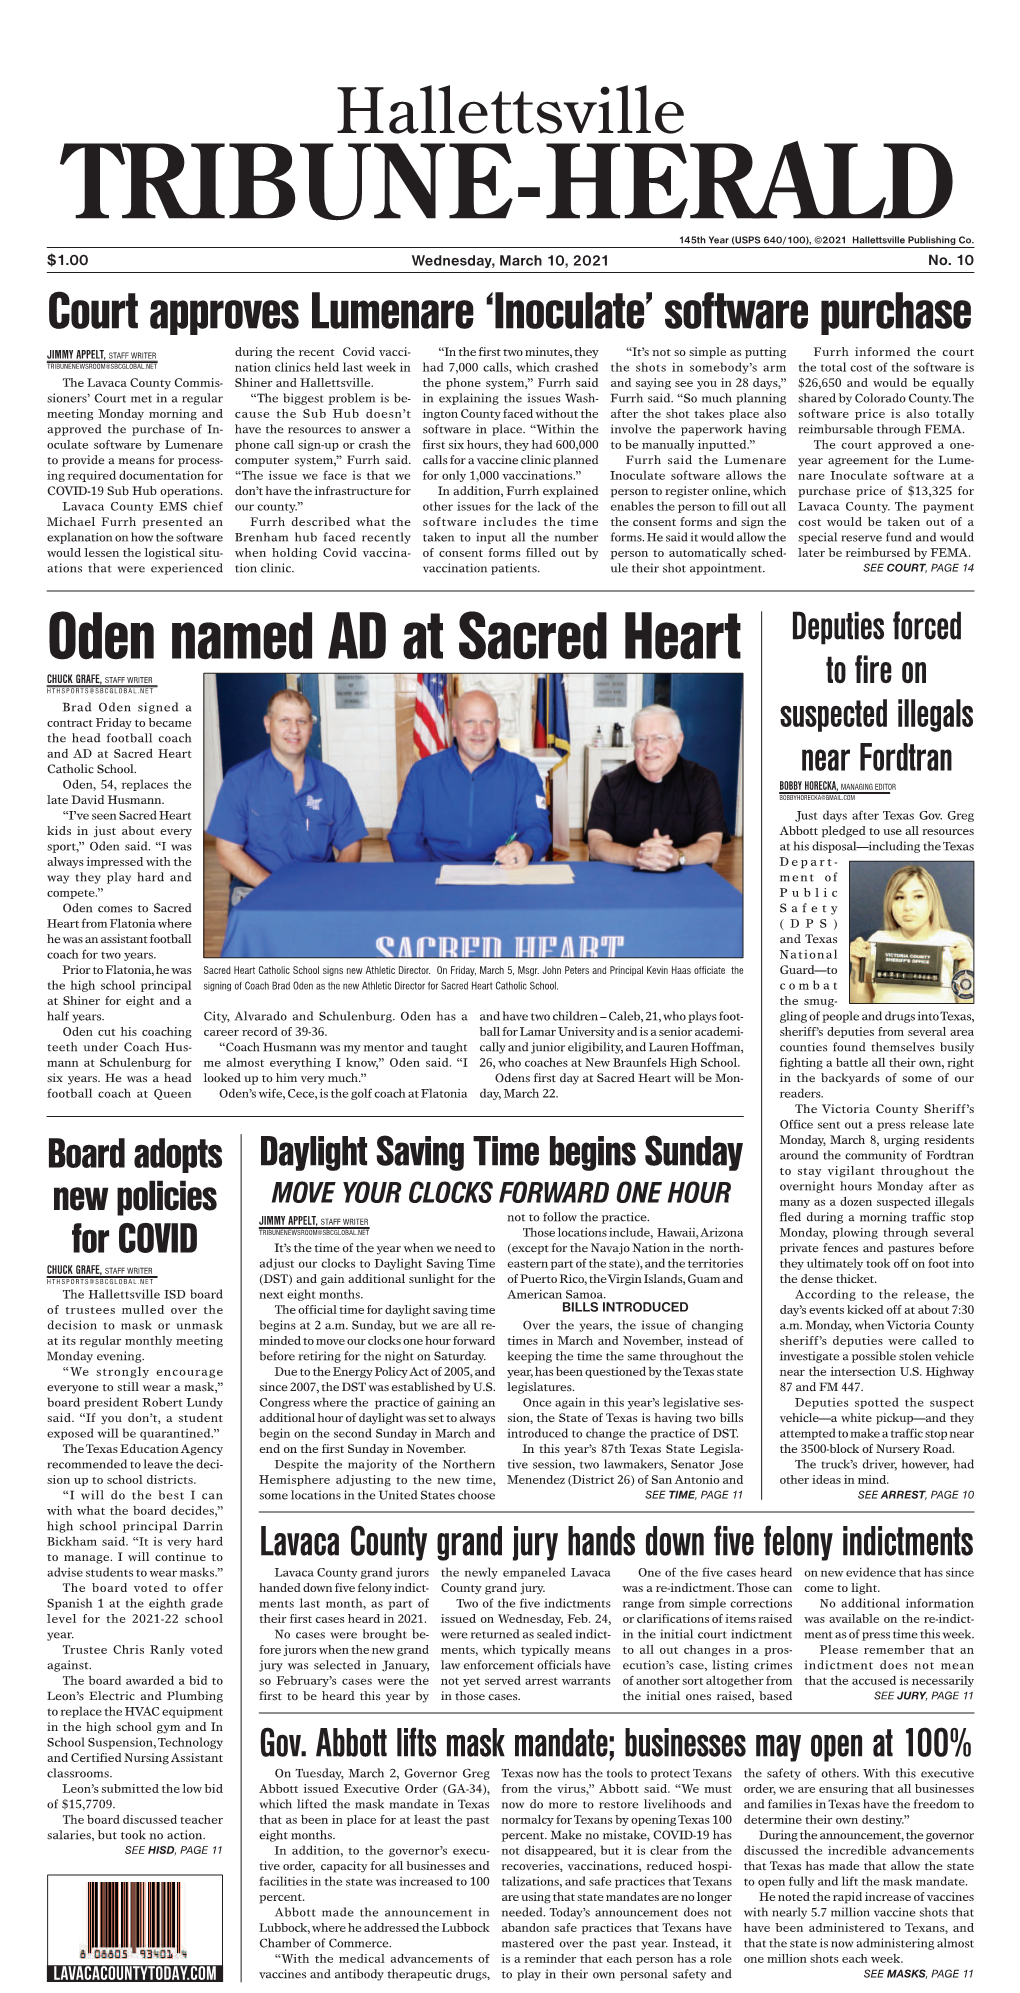 Oden Named AD at Sacred Heart